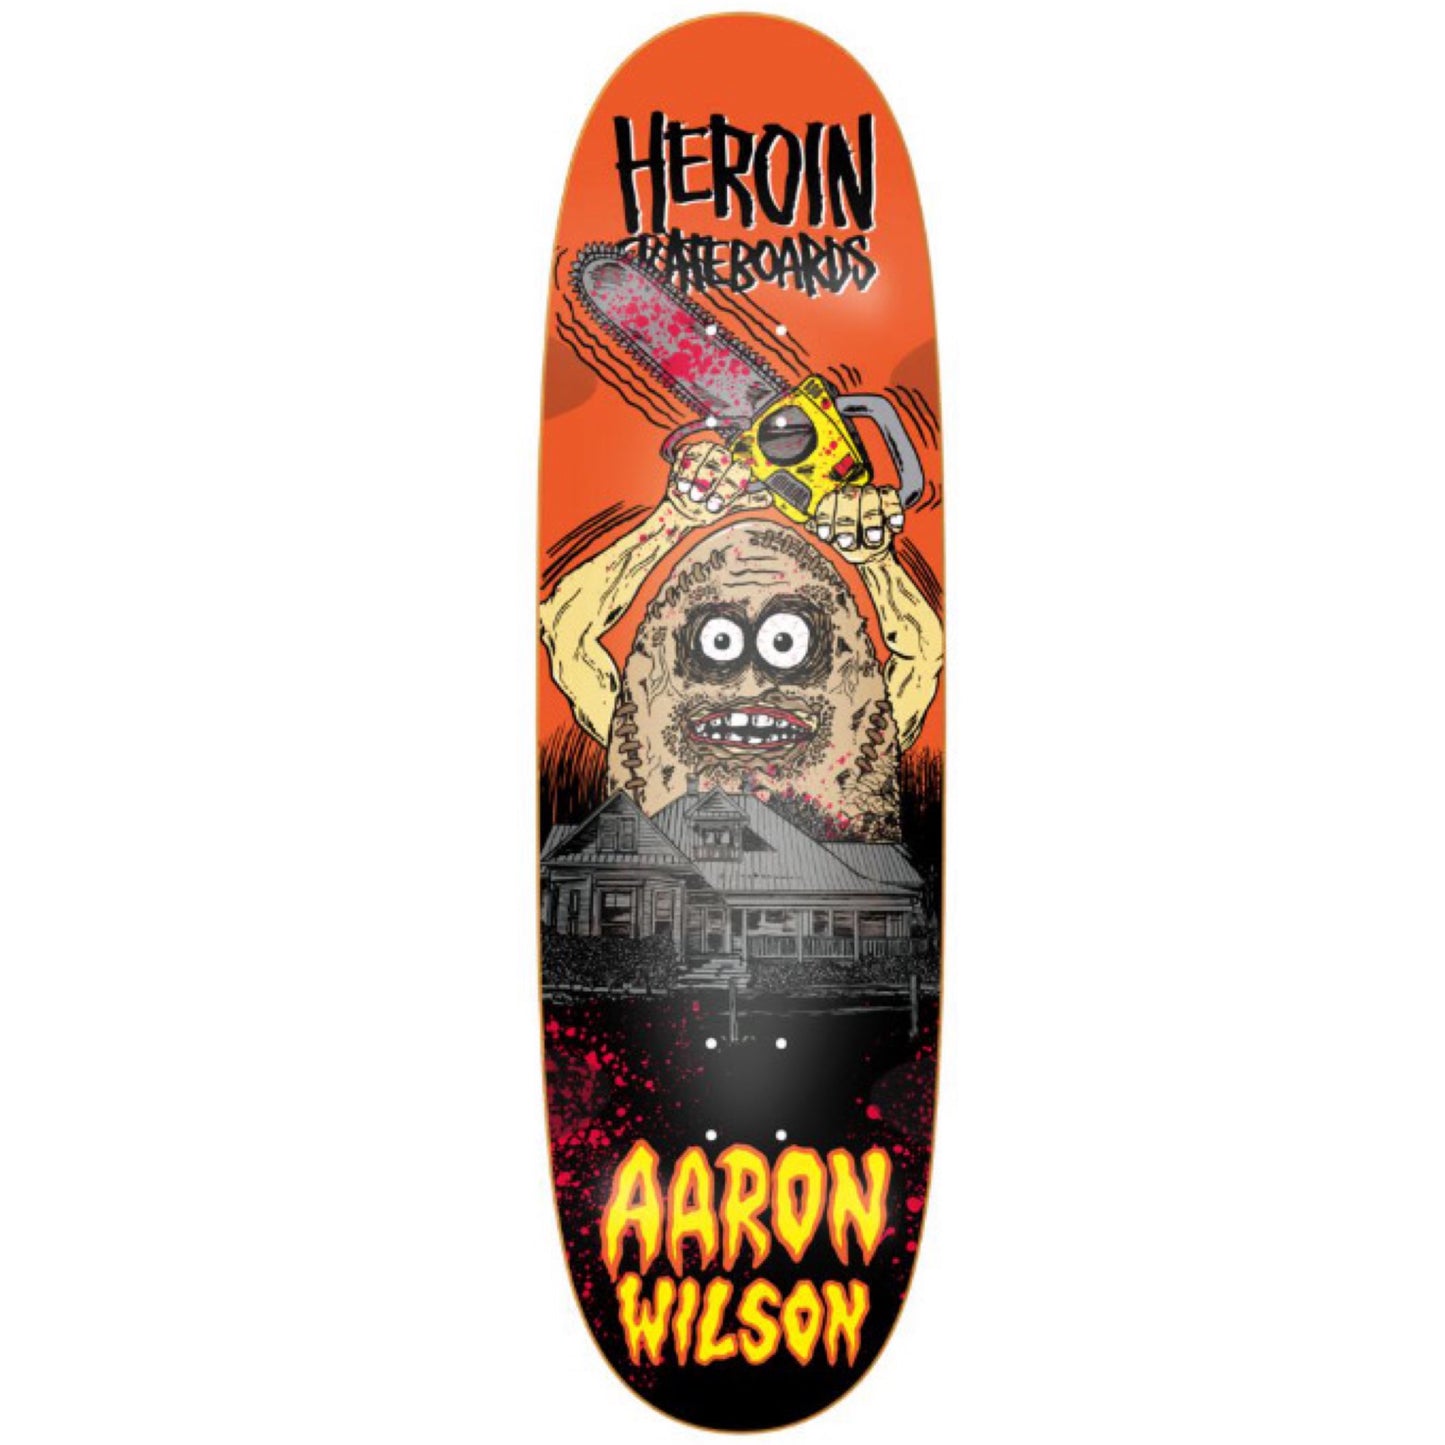 Heroin Symmetrical Aaron Wilson Teggxas Chainsaw Egg 9.12” Skateboard Deck